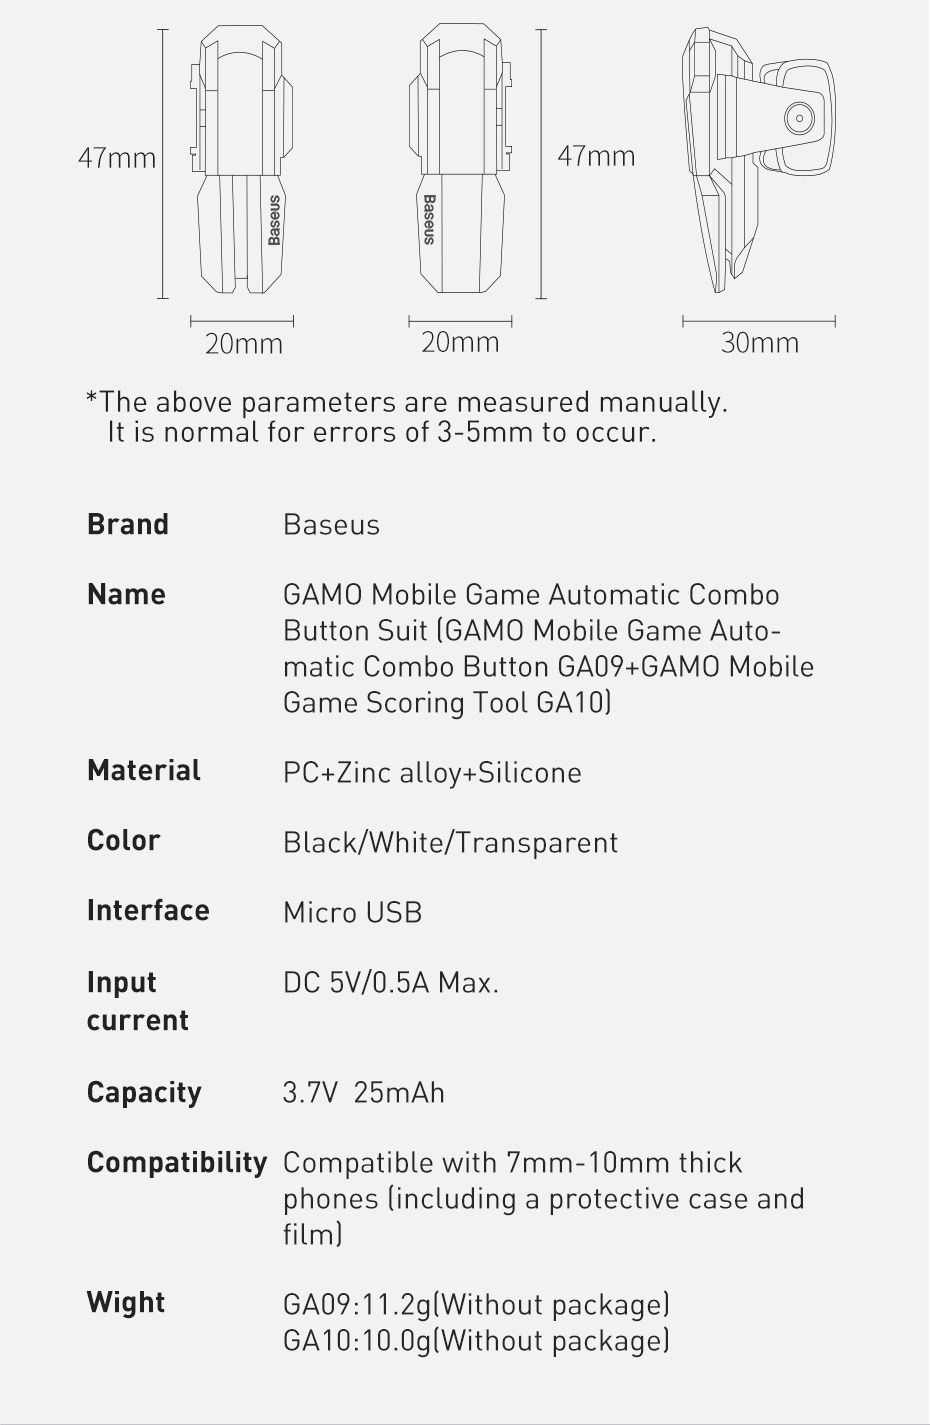 Baseus-GAMO-4-Speed-Adjustable-Automatic-Combo-Button-Suit-Moible-Phone-Shooting-Fire-Button-Aim-L1--1766436